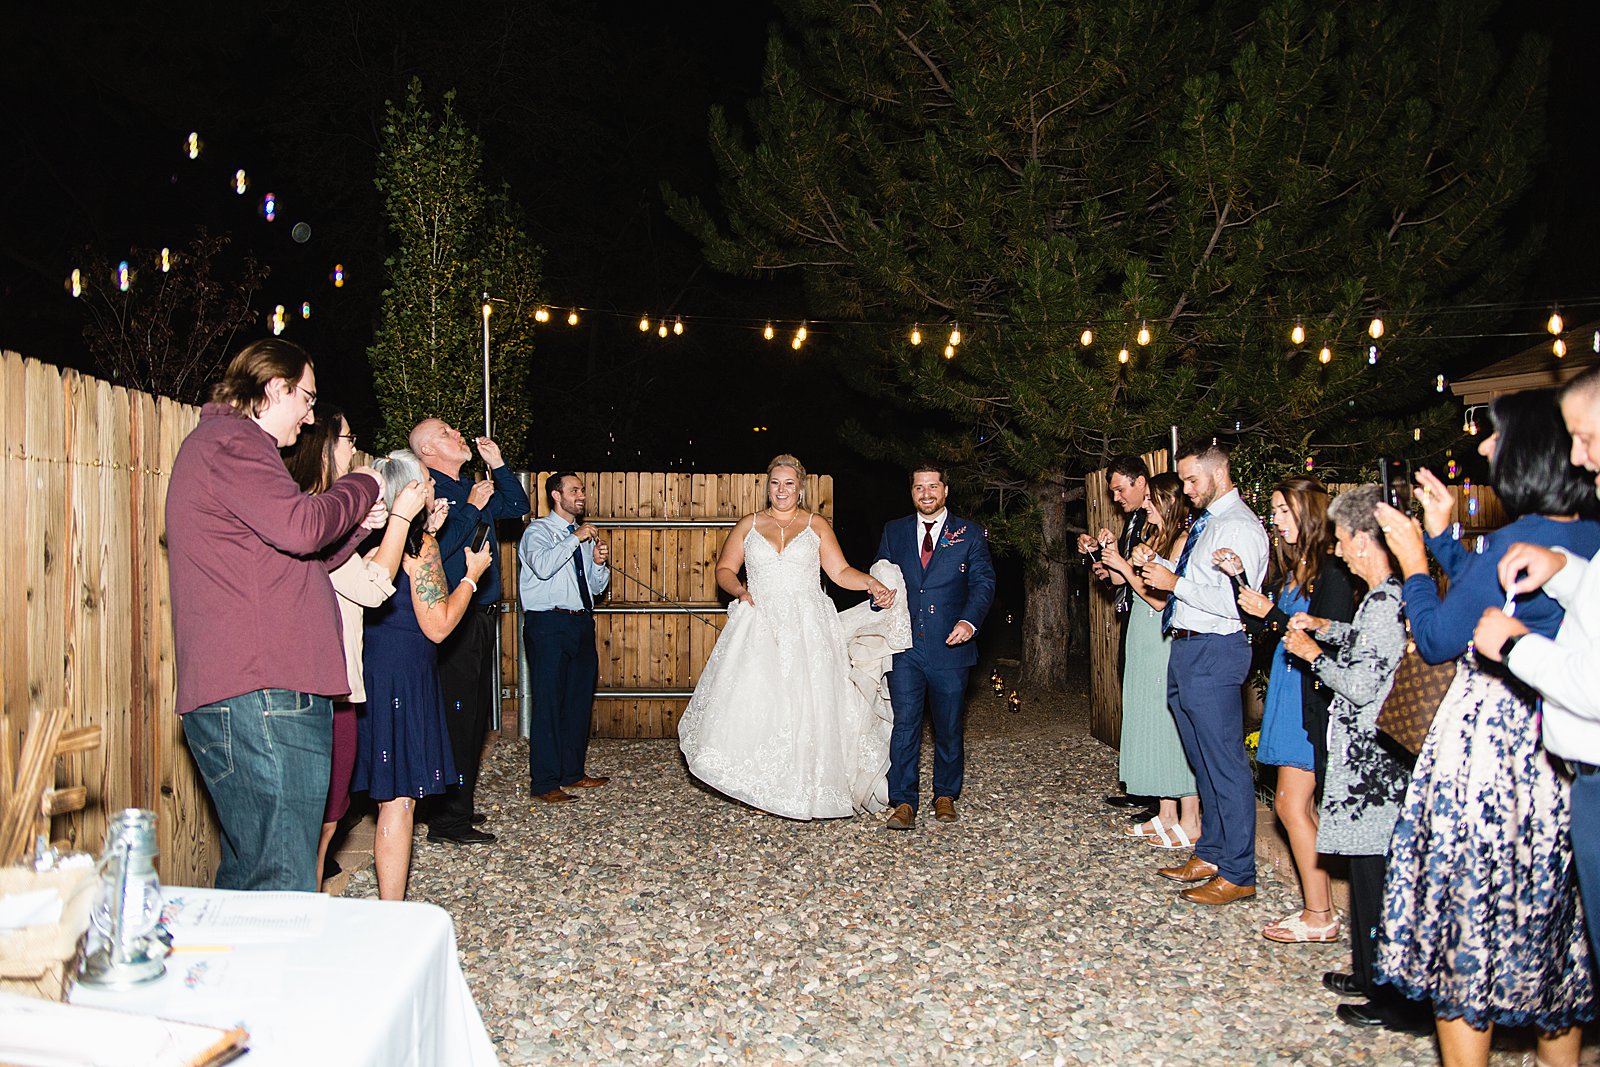 Bride and groom's grand entrance at their backyard wedding reception by Arizona wedding photographer PMA Photography.